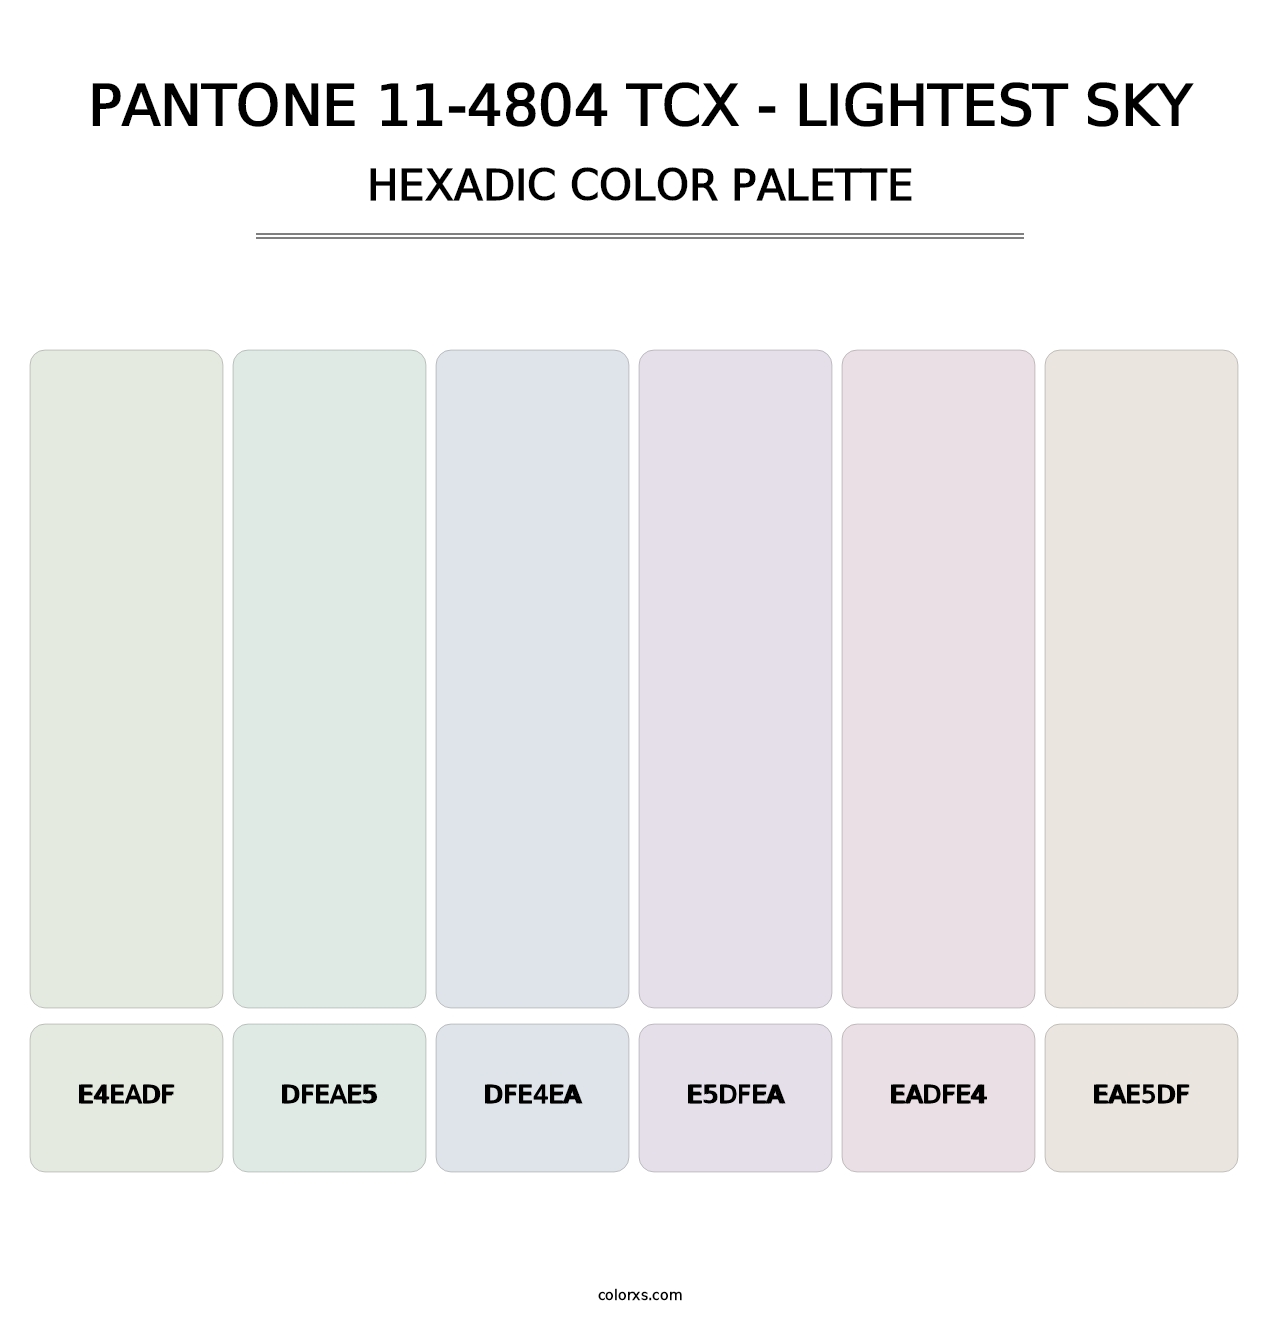 PANTONE 11-4804 TCX - Lightest Sky - Hexadic Color Palette